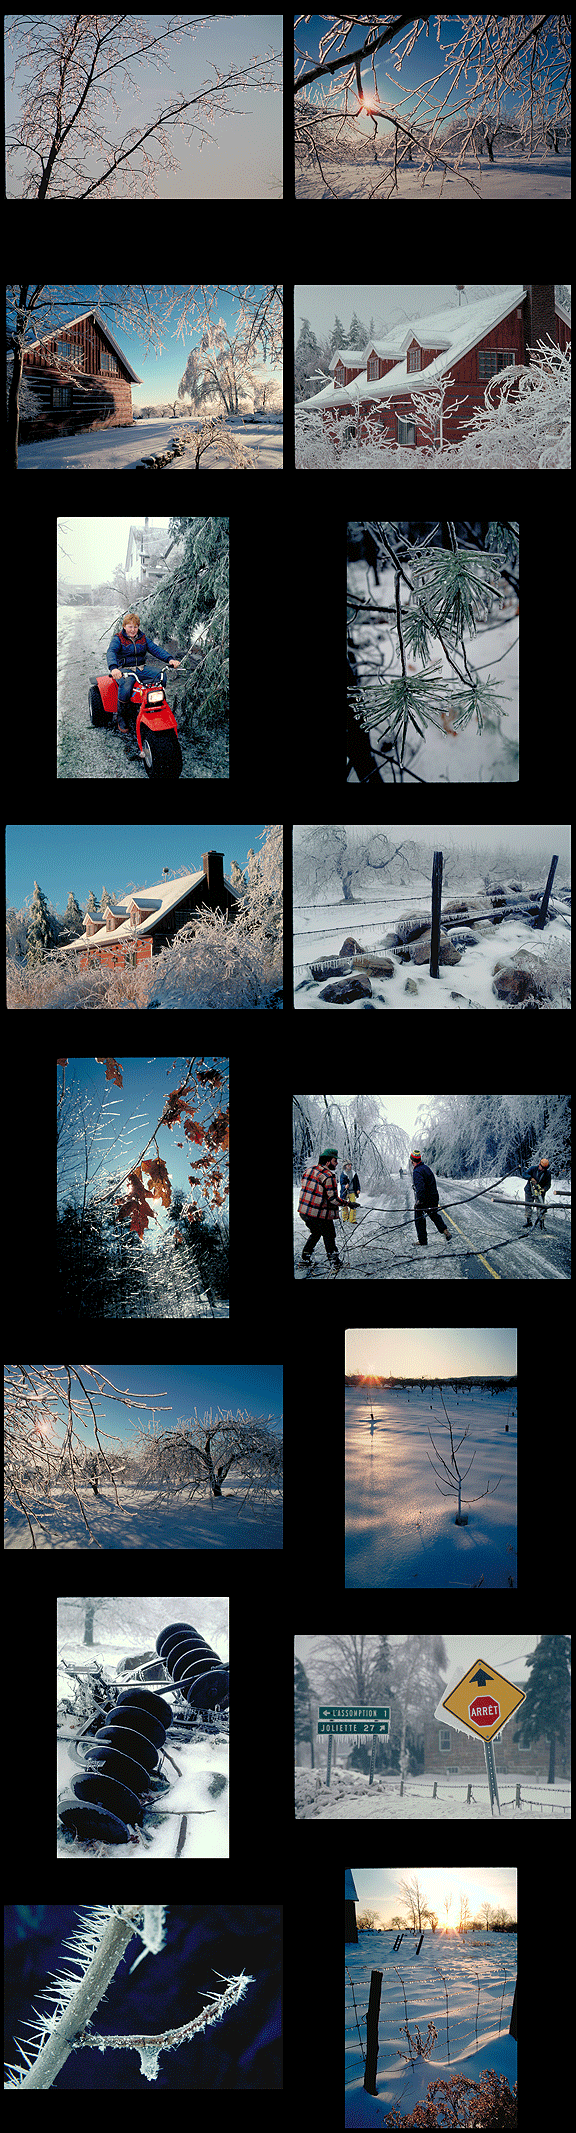 ice storm photos